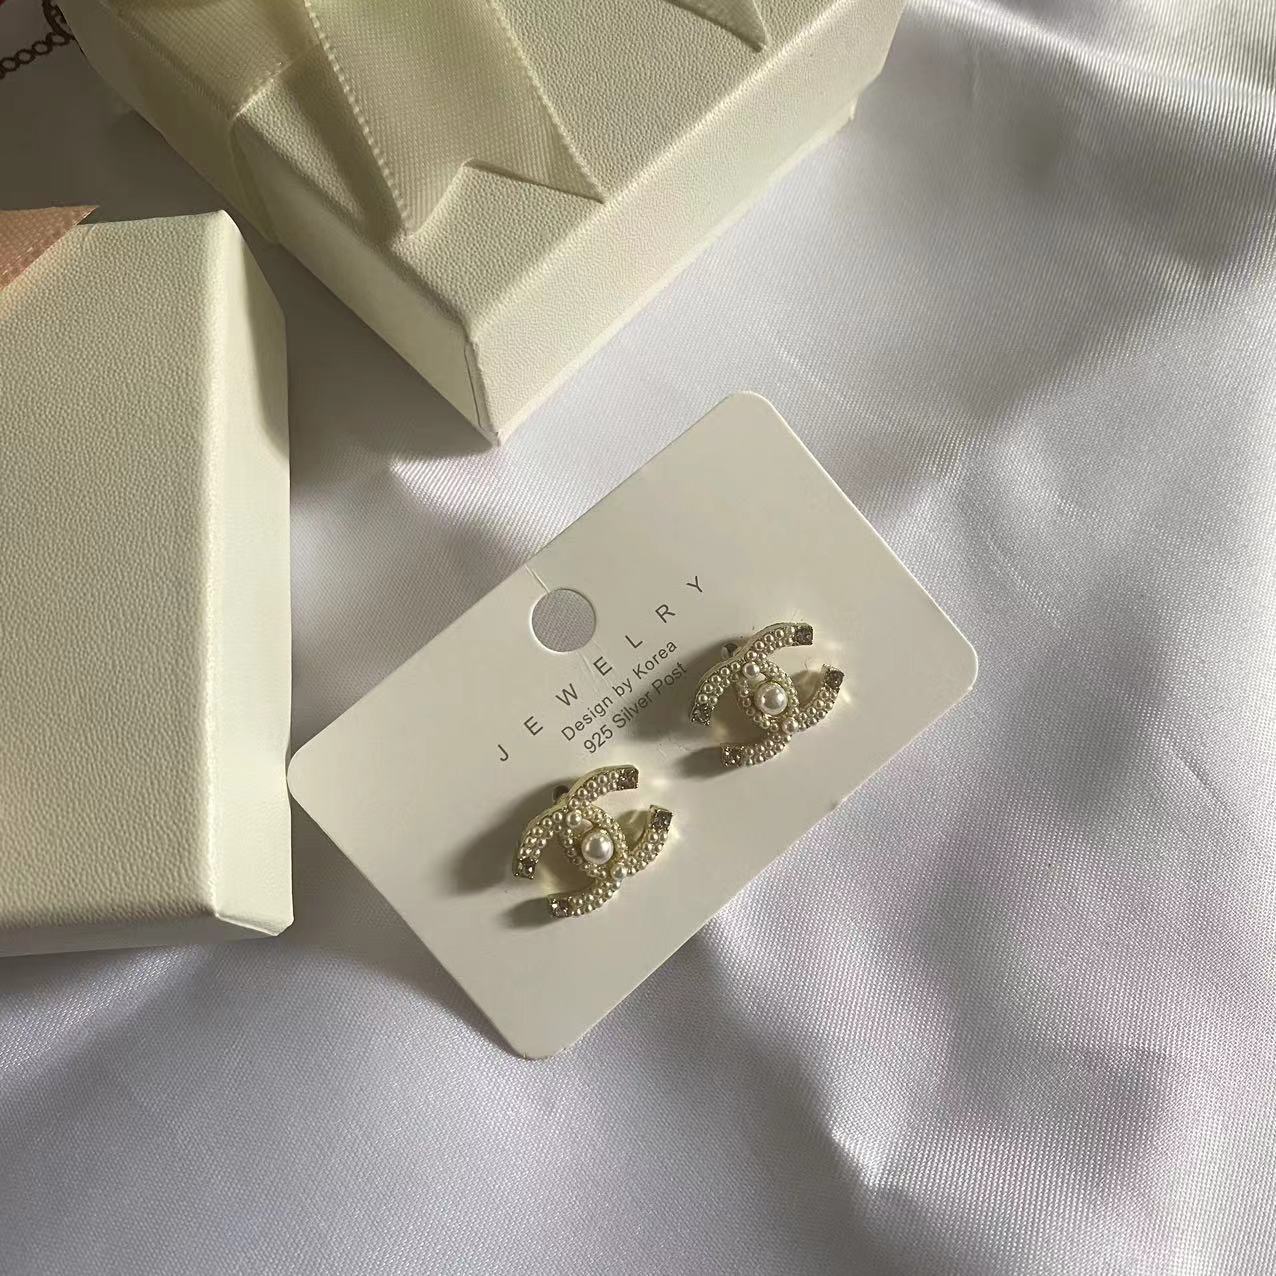 Big sale! New Pearls Chanel earrings